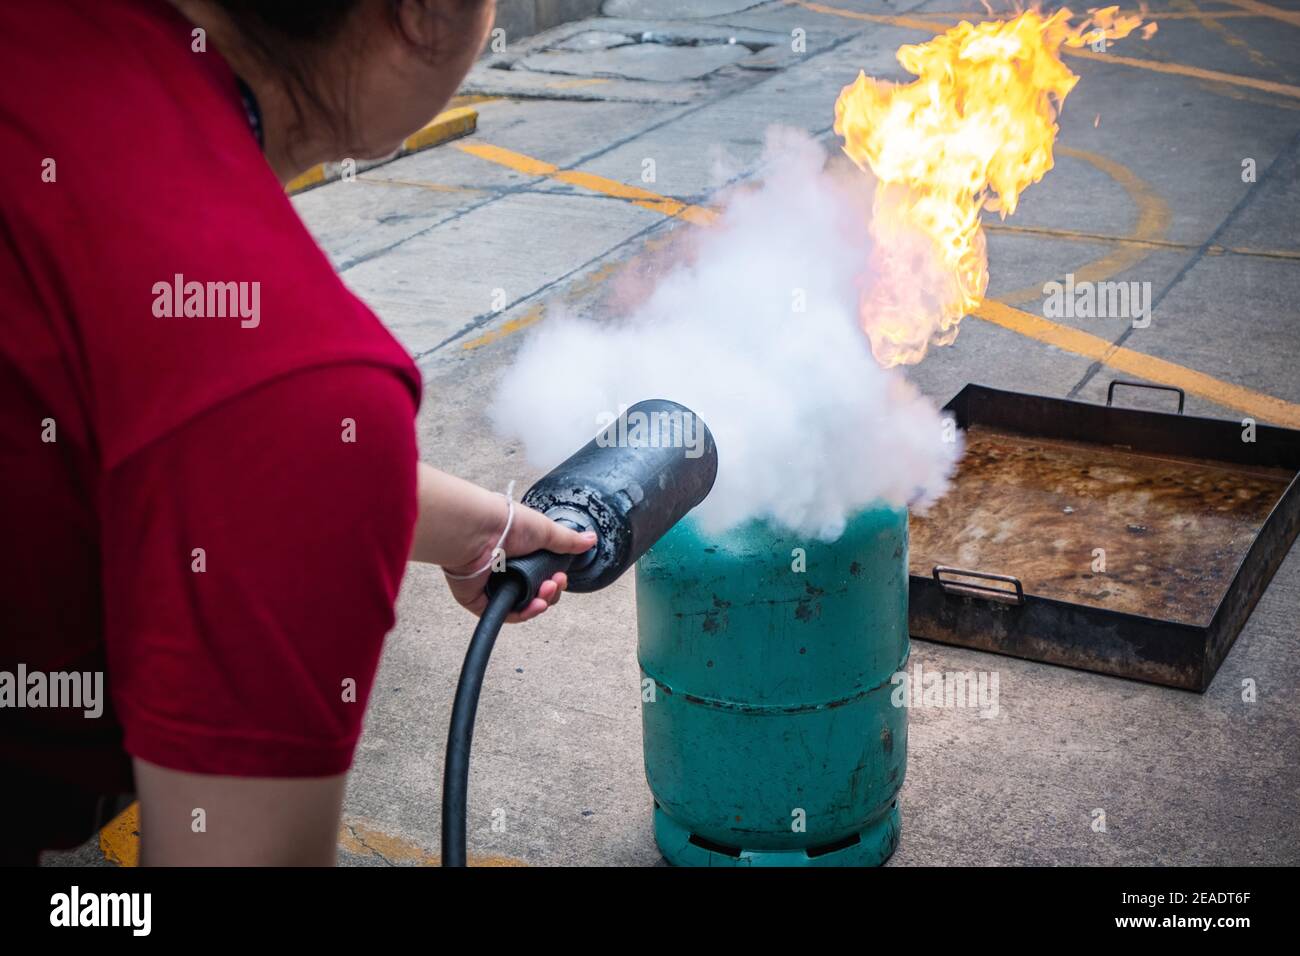 Employees firefighting training,Extinguish a fire. Stock Photo